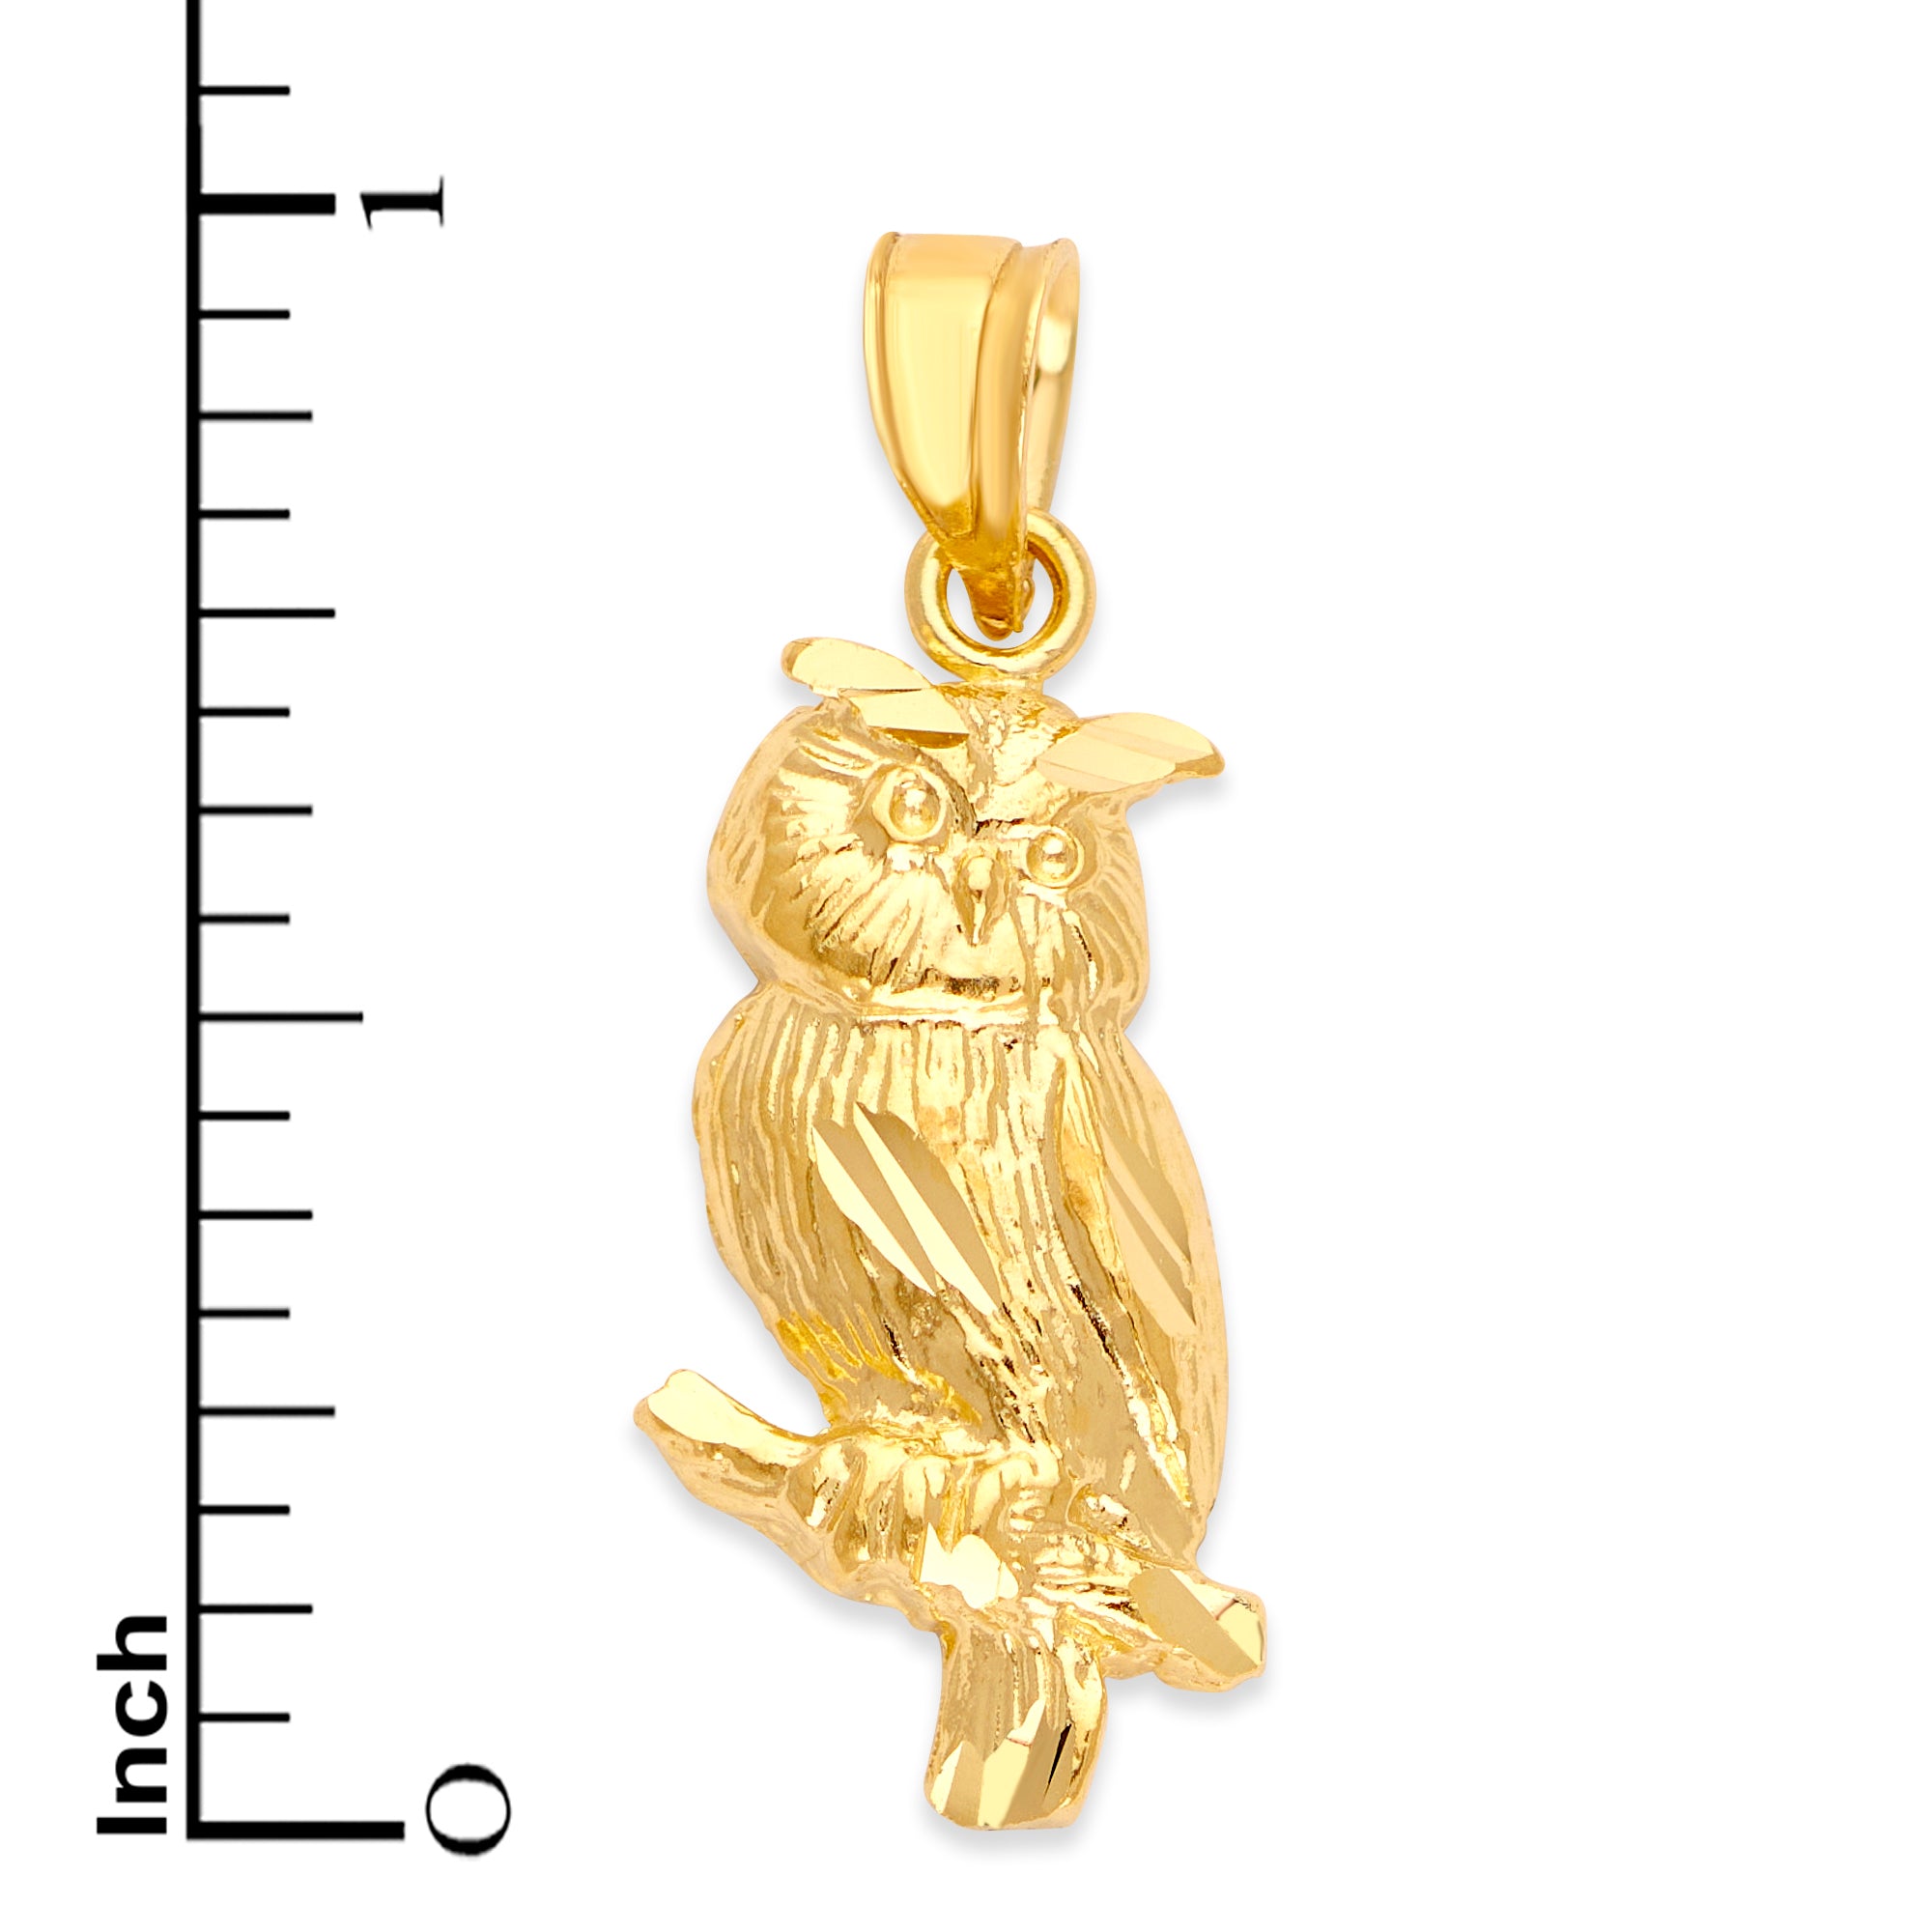 Solid Gold Owl Pendant - 10k or 14k